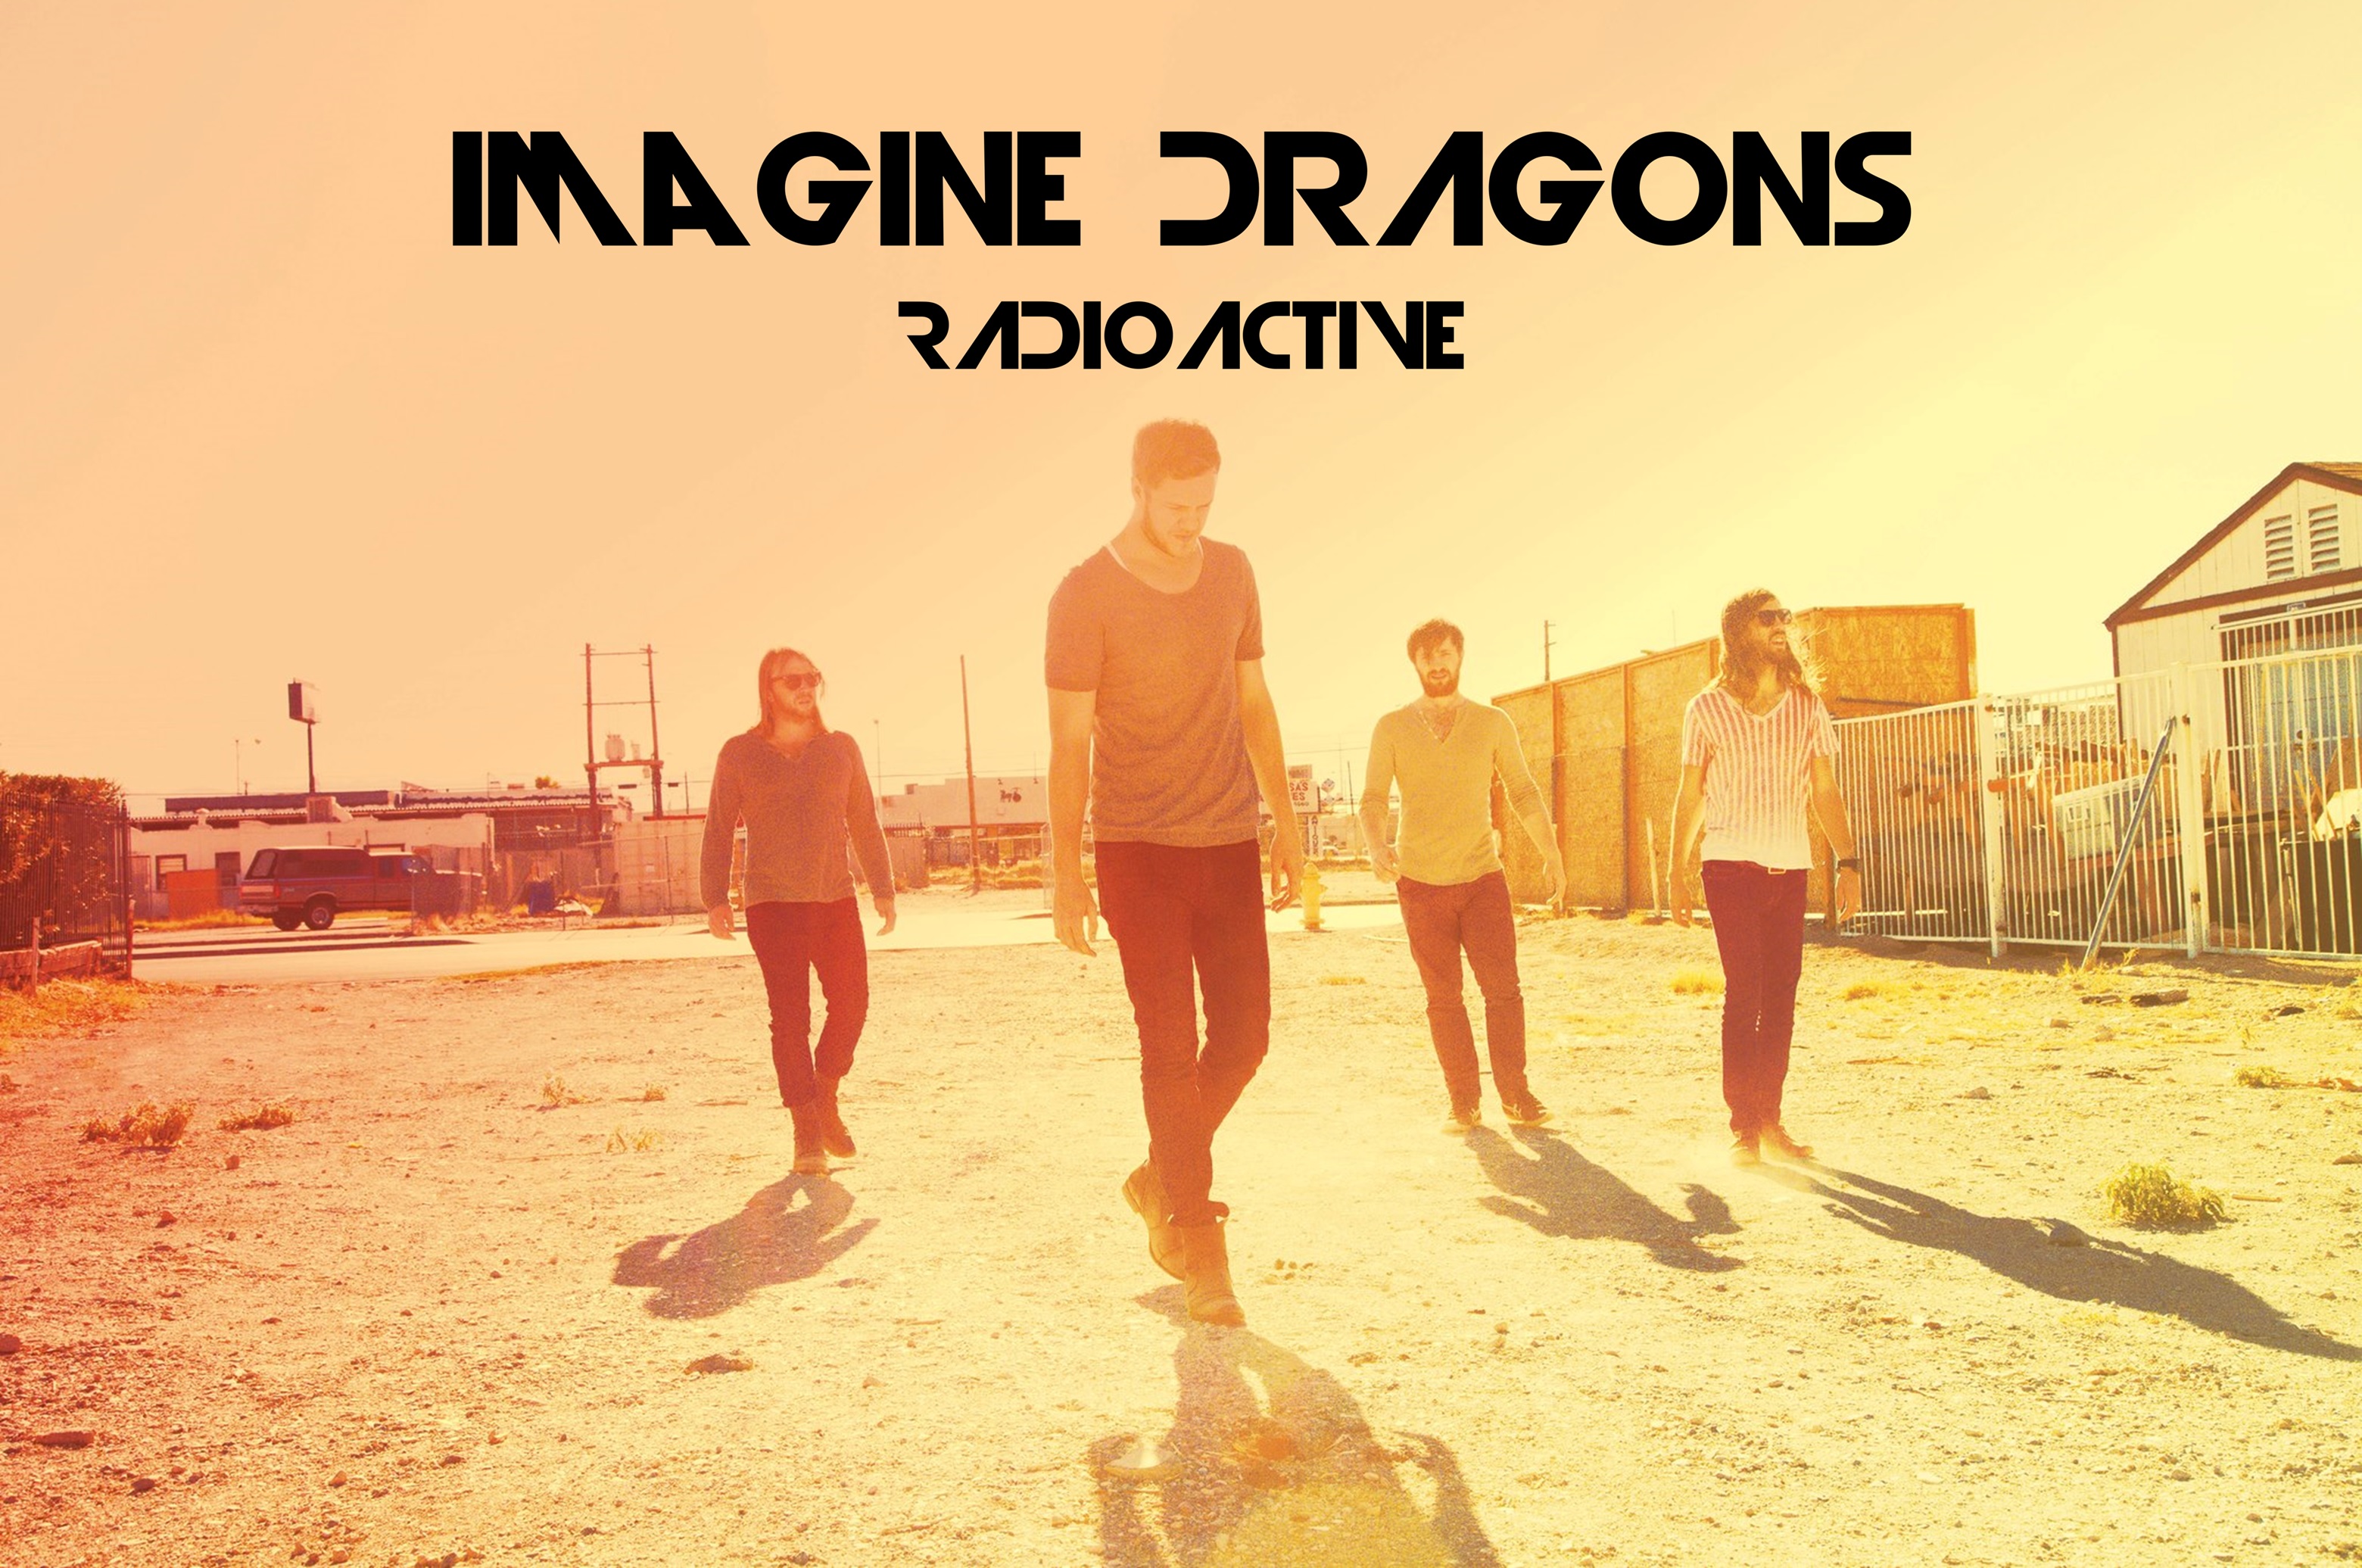 Imagine download. Imagine Dragons. Imagine Dragons Radioactive. Imagine Dragons обложки. Имеджин Драгонс радиоактив.